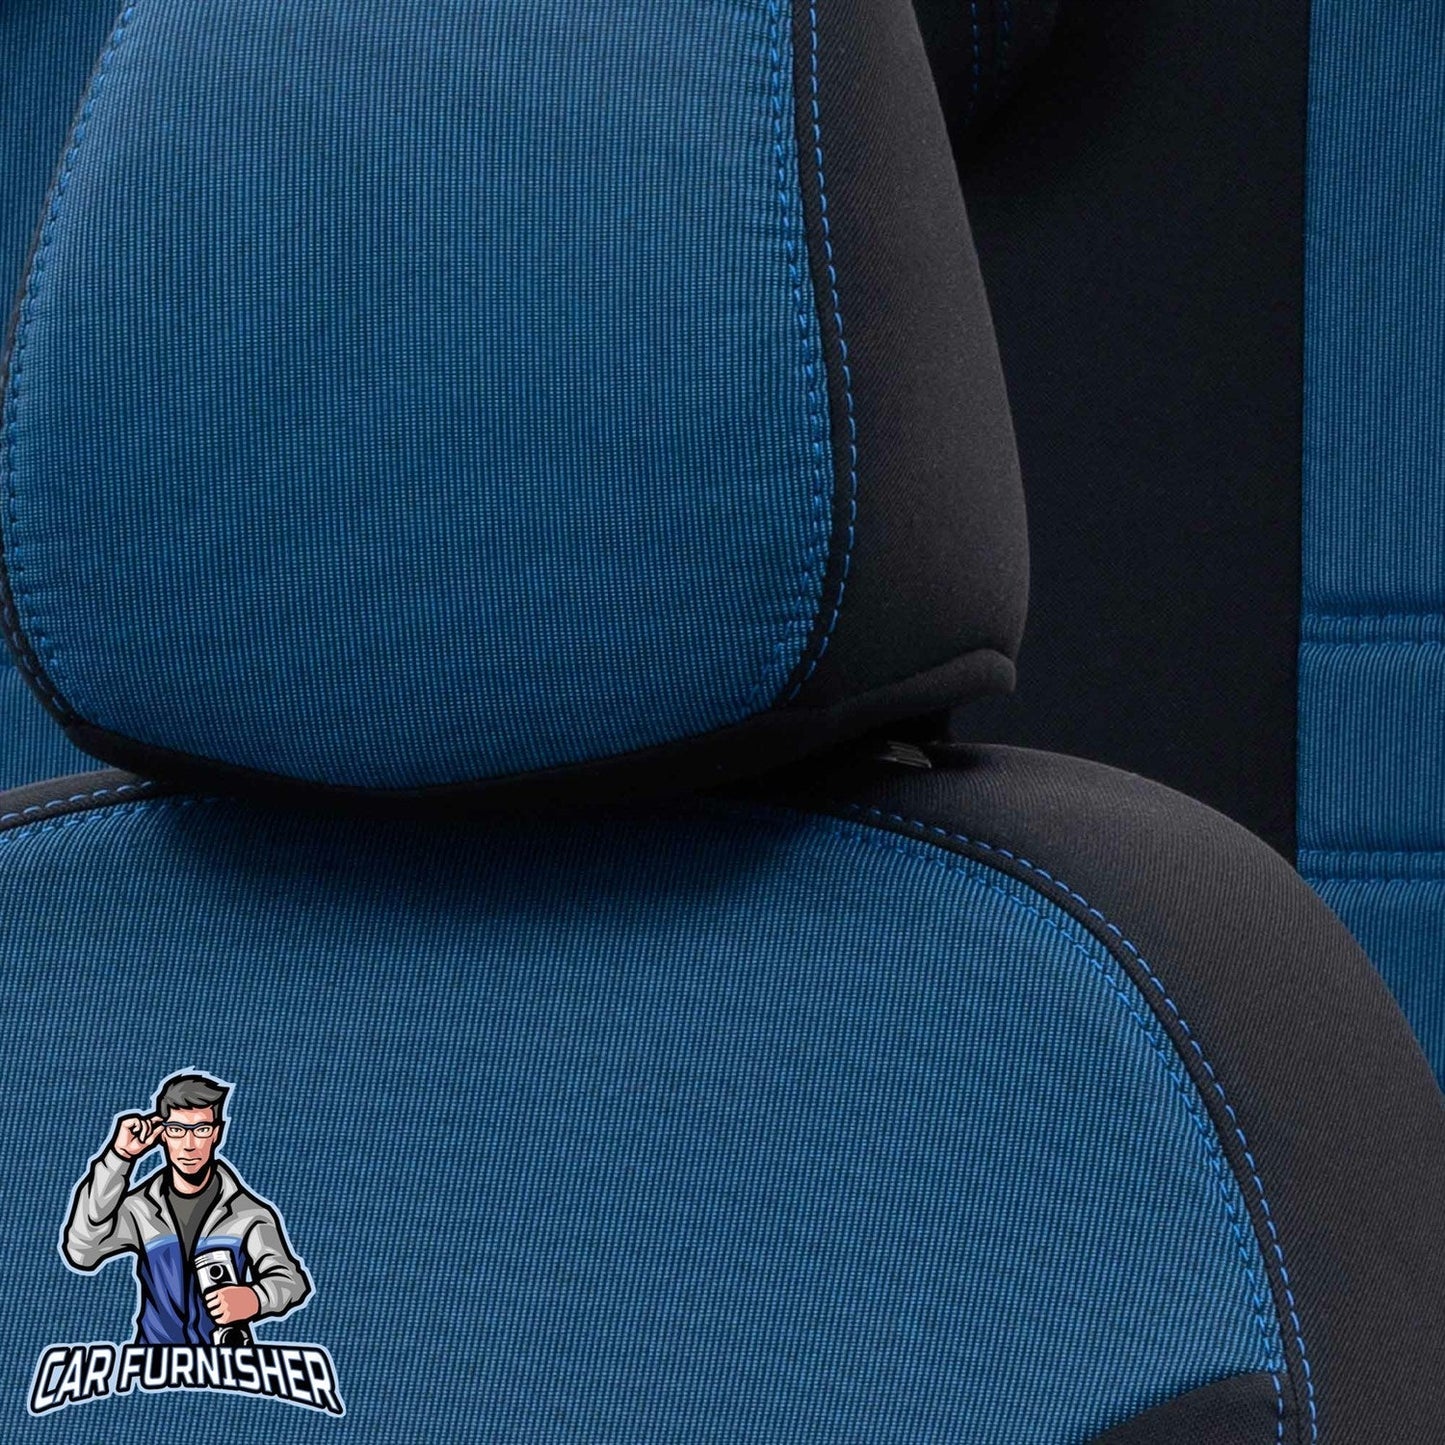 Honda HRV Seat Covers Original Jacquard Design Blue Jacquard Fabric